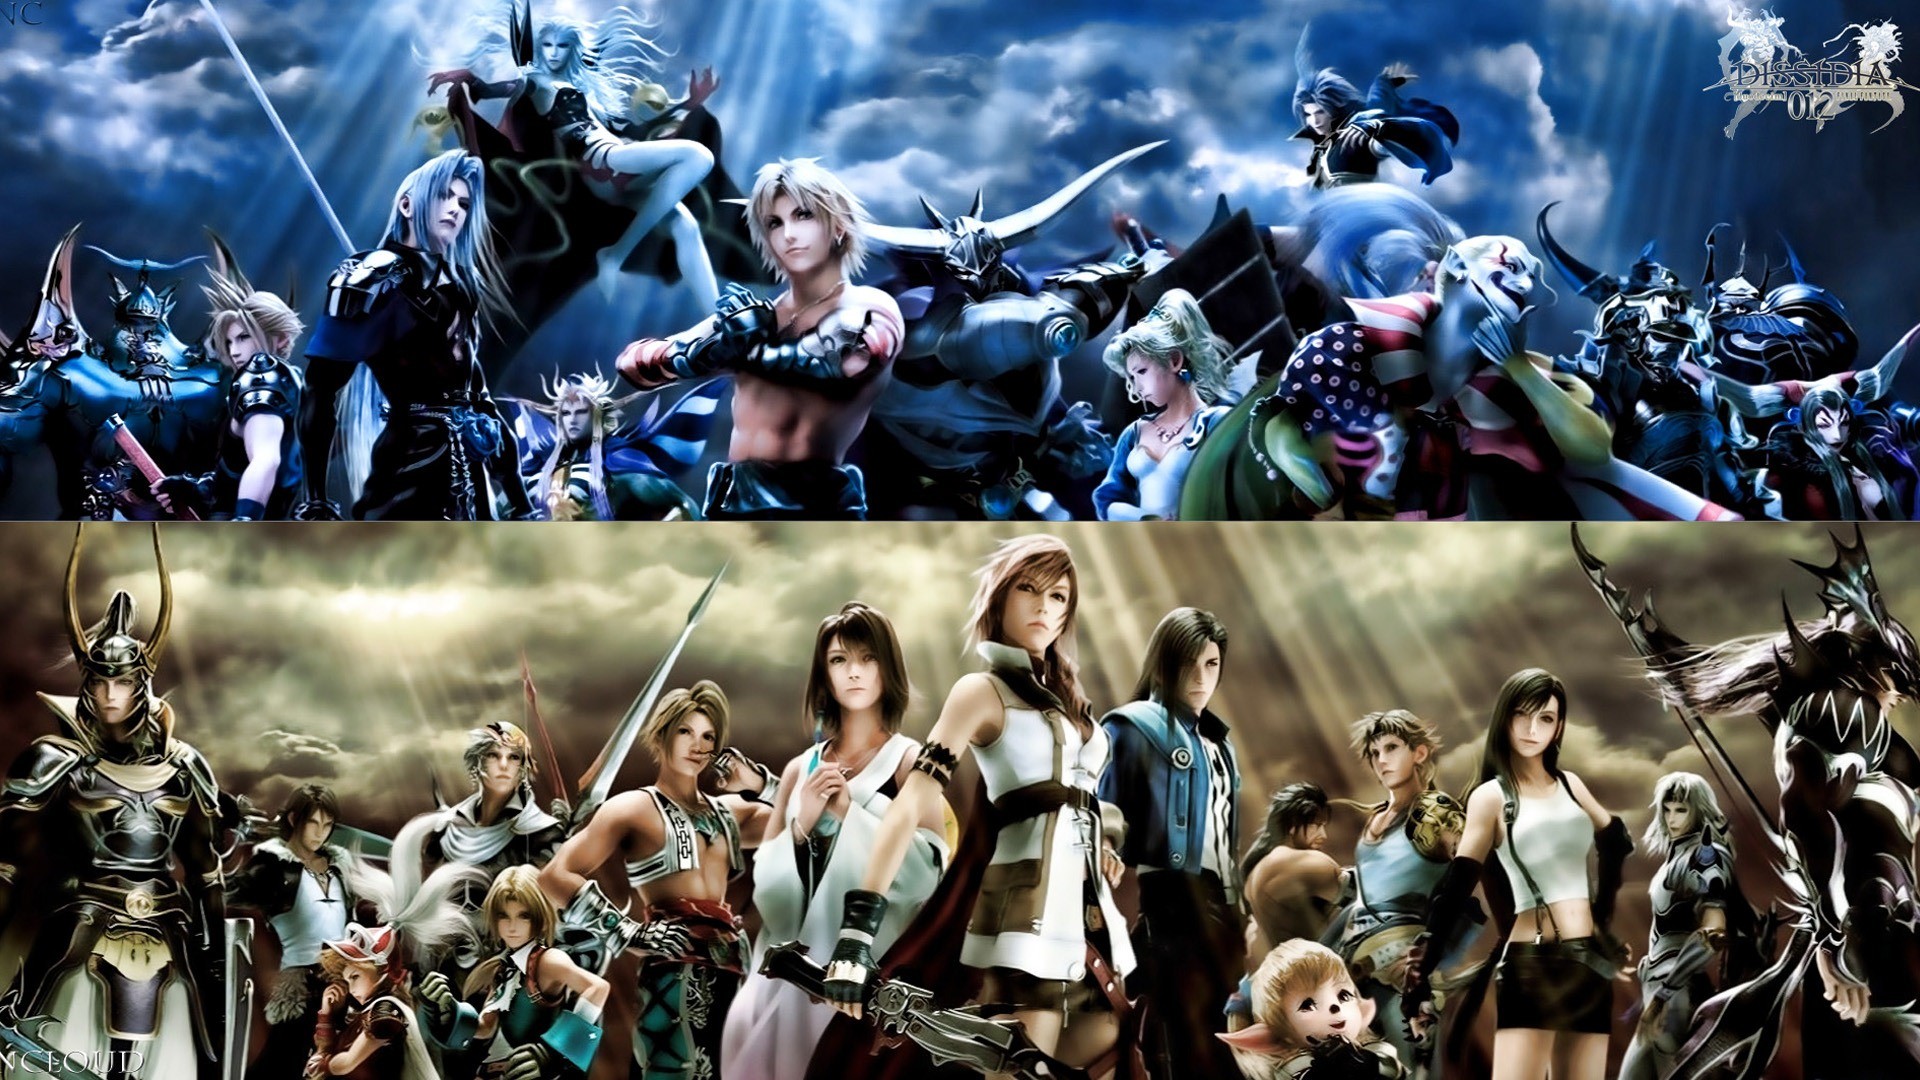 100+] Final Fantasy 7 Wallpapers | Wallpapers.com